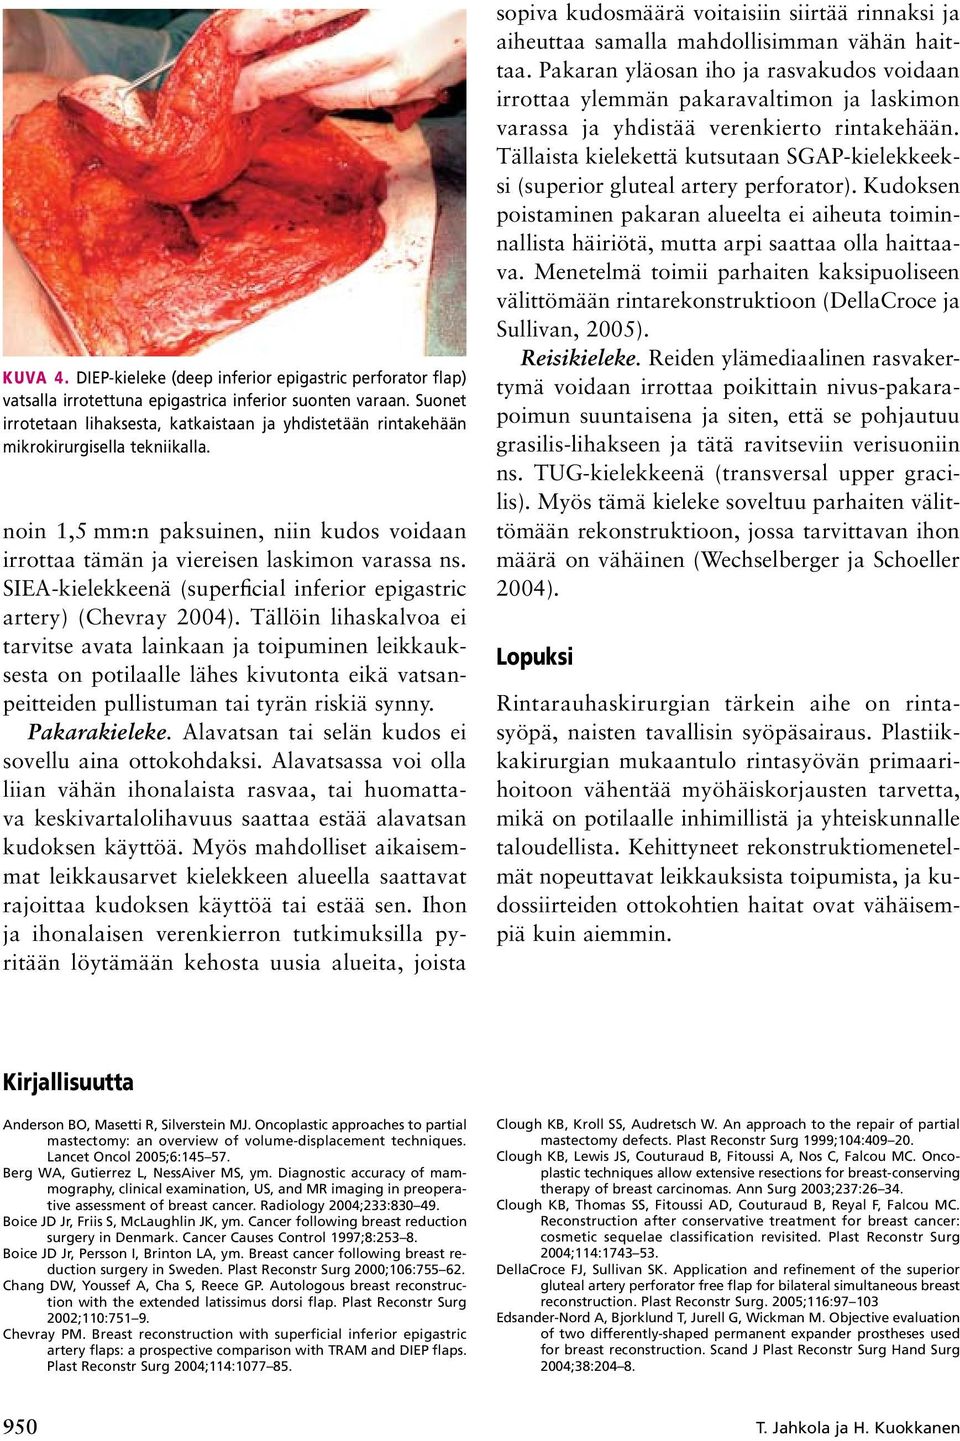 SIEA-kielekkeenä (superficial inferior epigastric artery) (Chevray 2004).